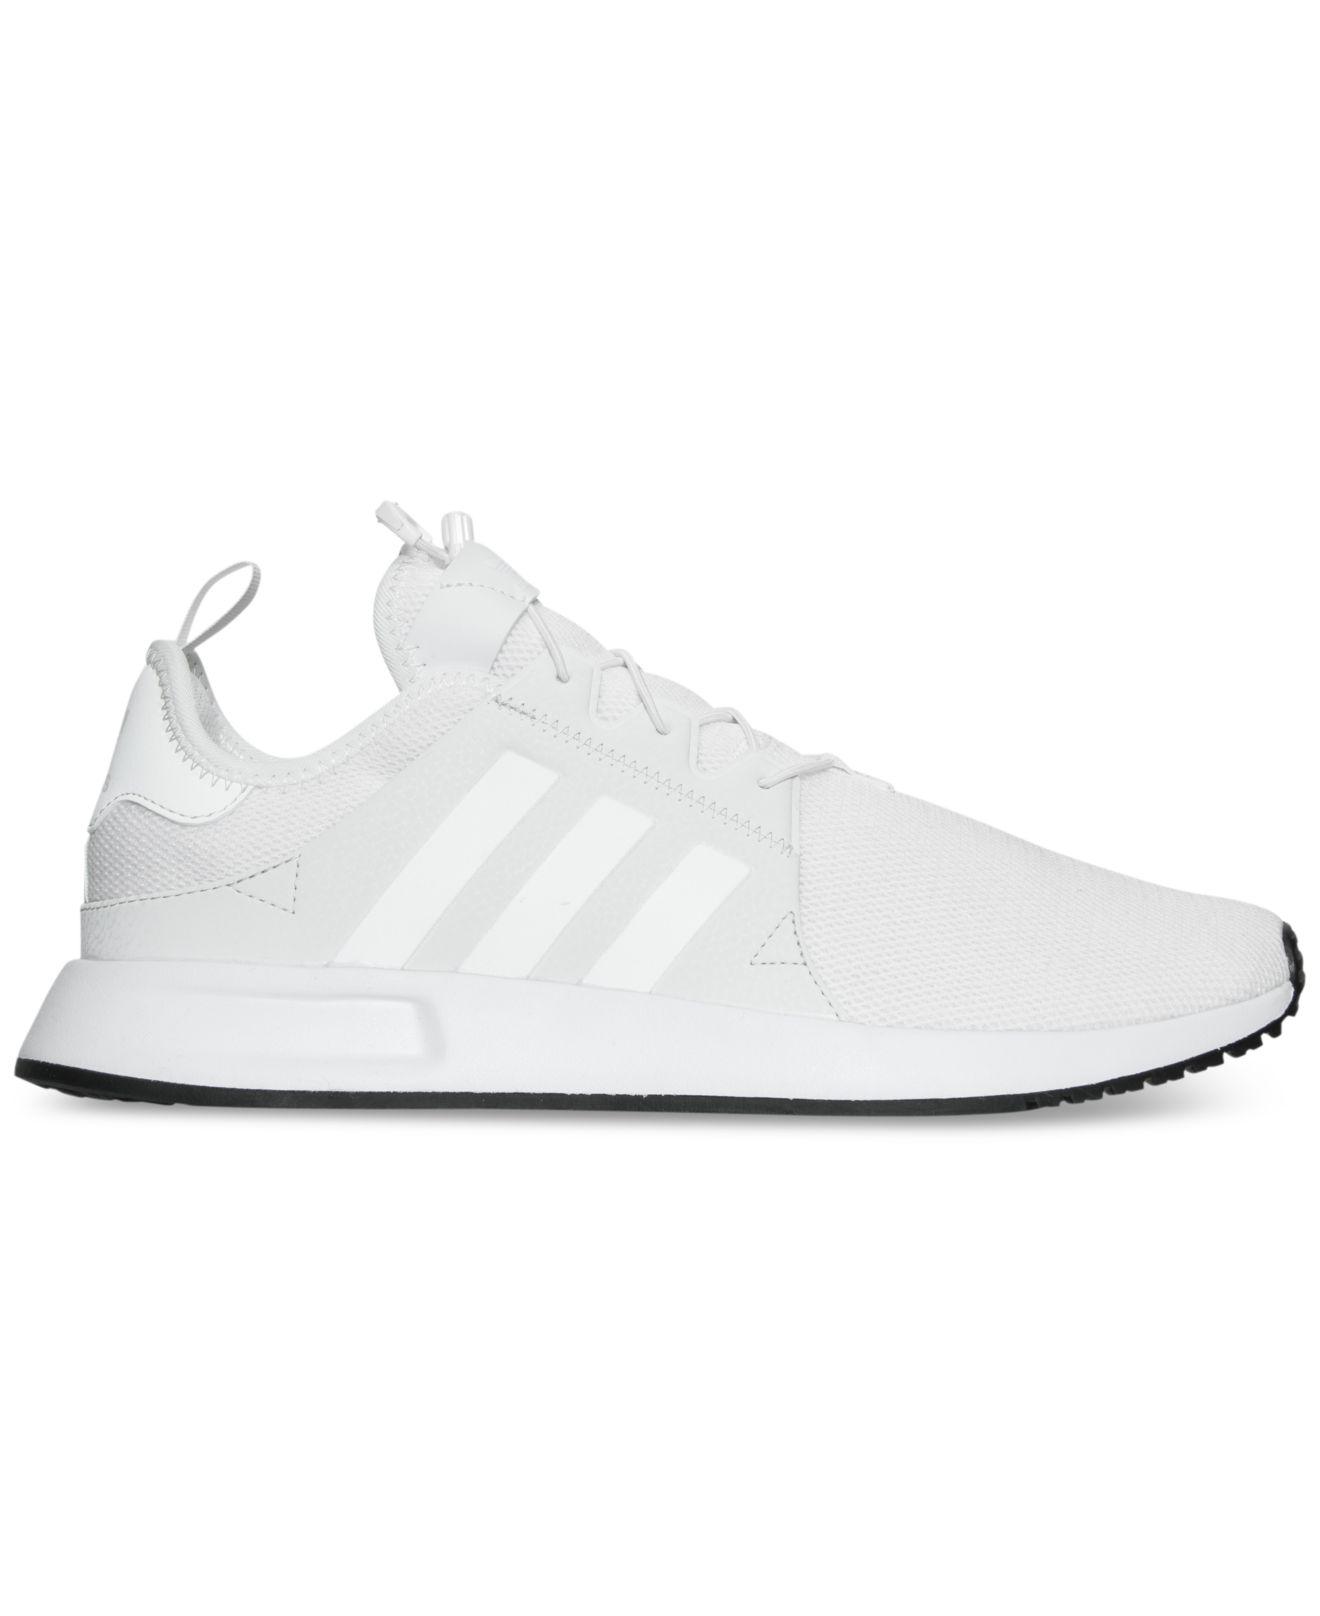 adidas xplorer grey & white shoes